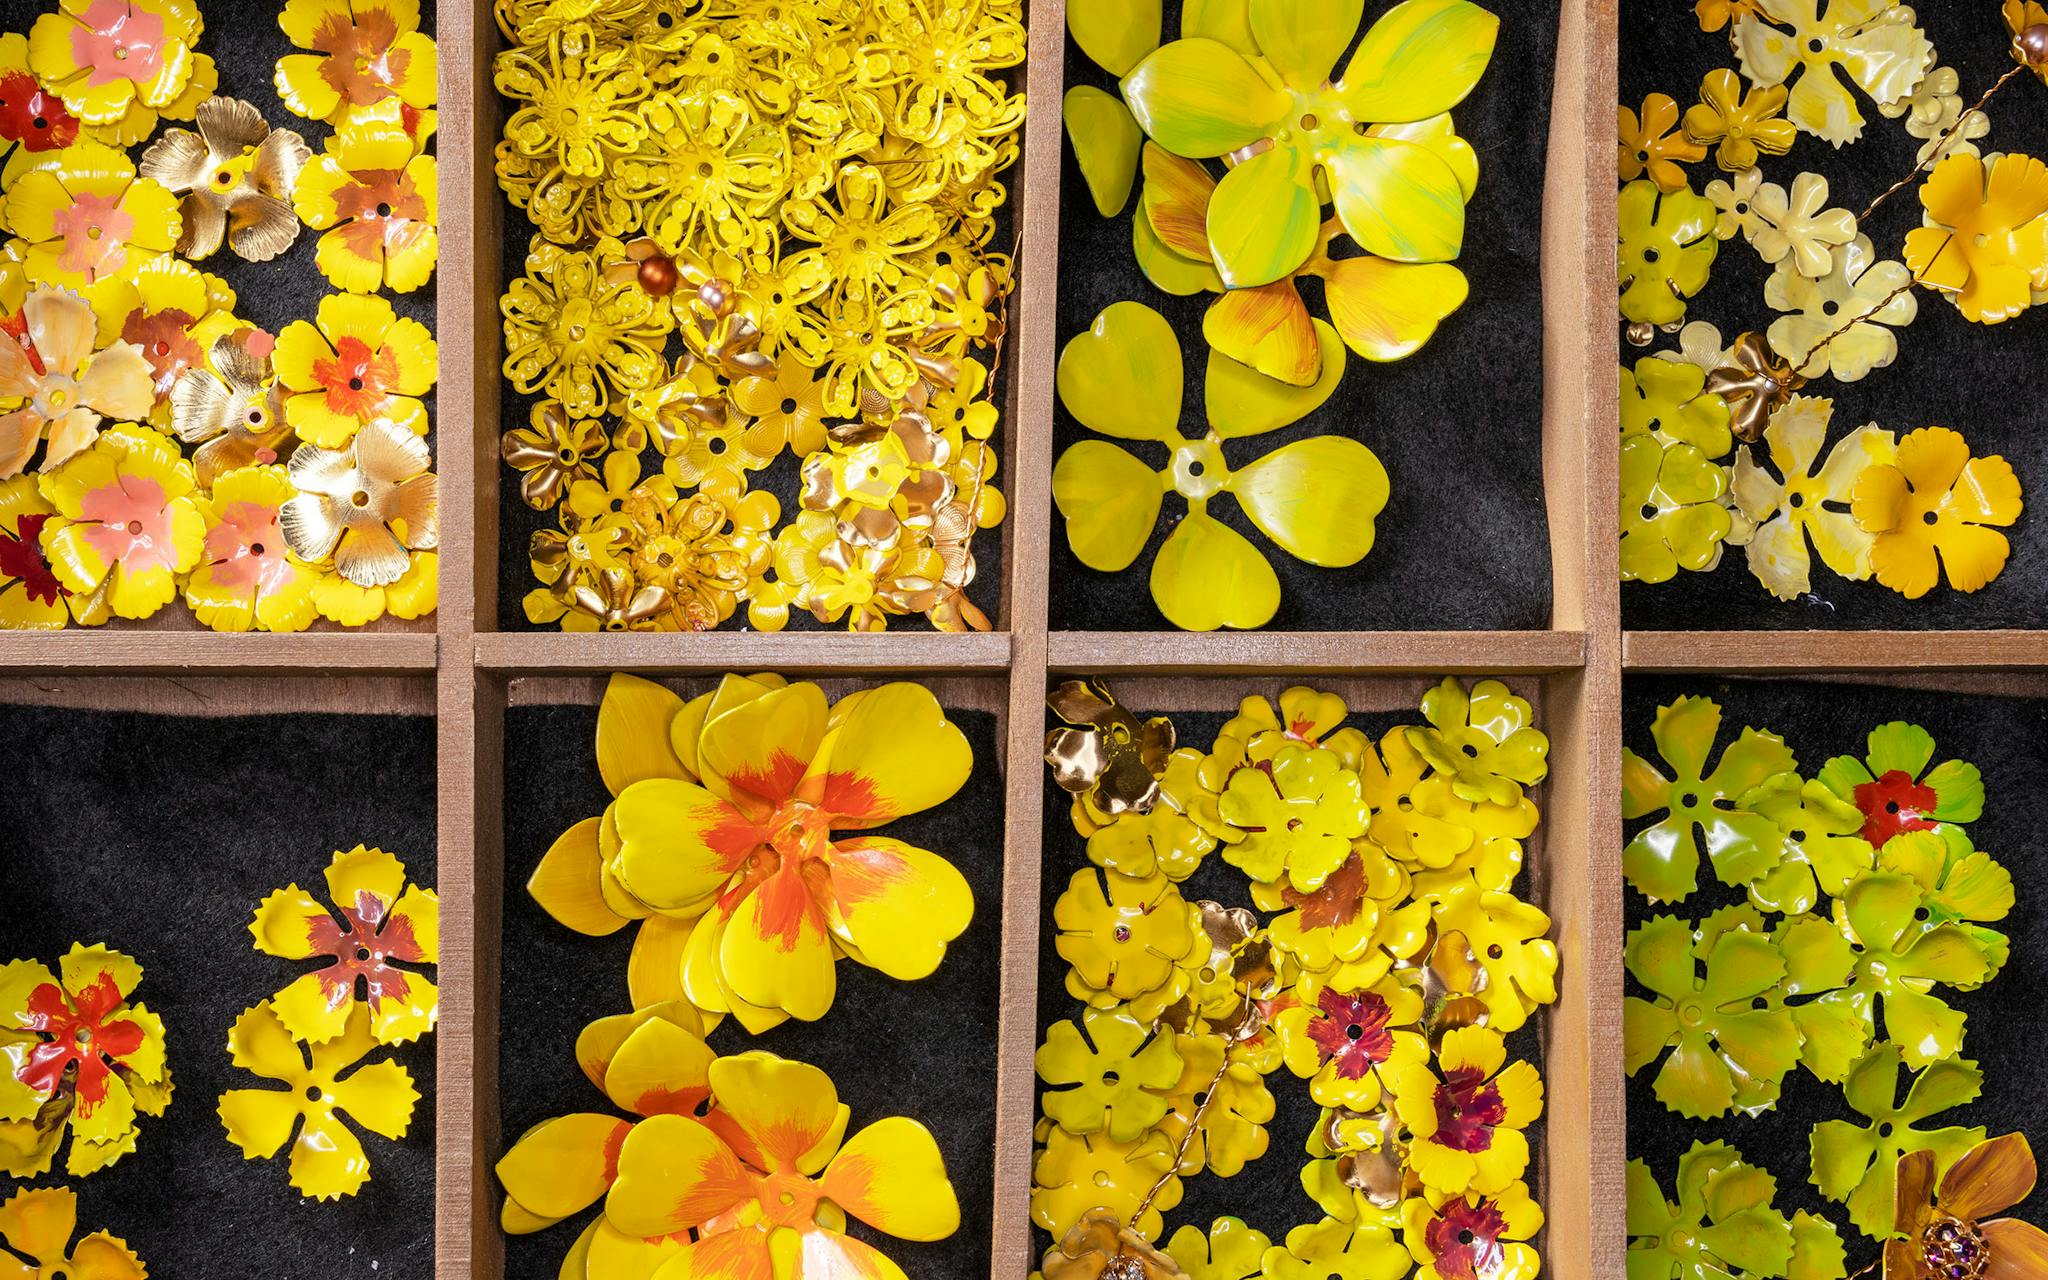 Veronica-Prida-Da-Vero-Davero-Bridal-San-Antonio-yellow-flowers